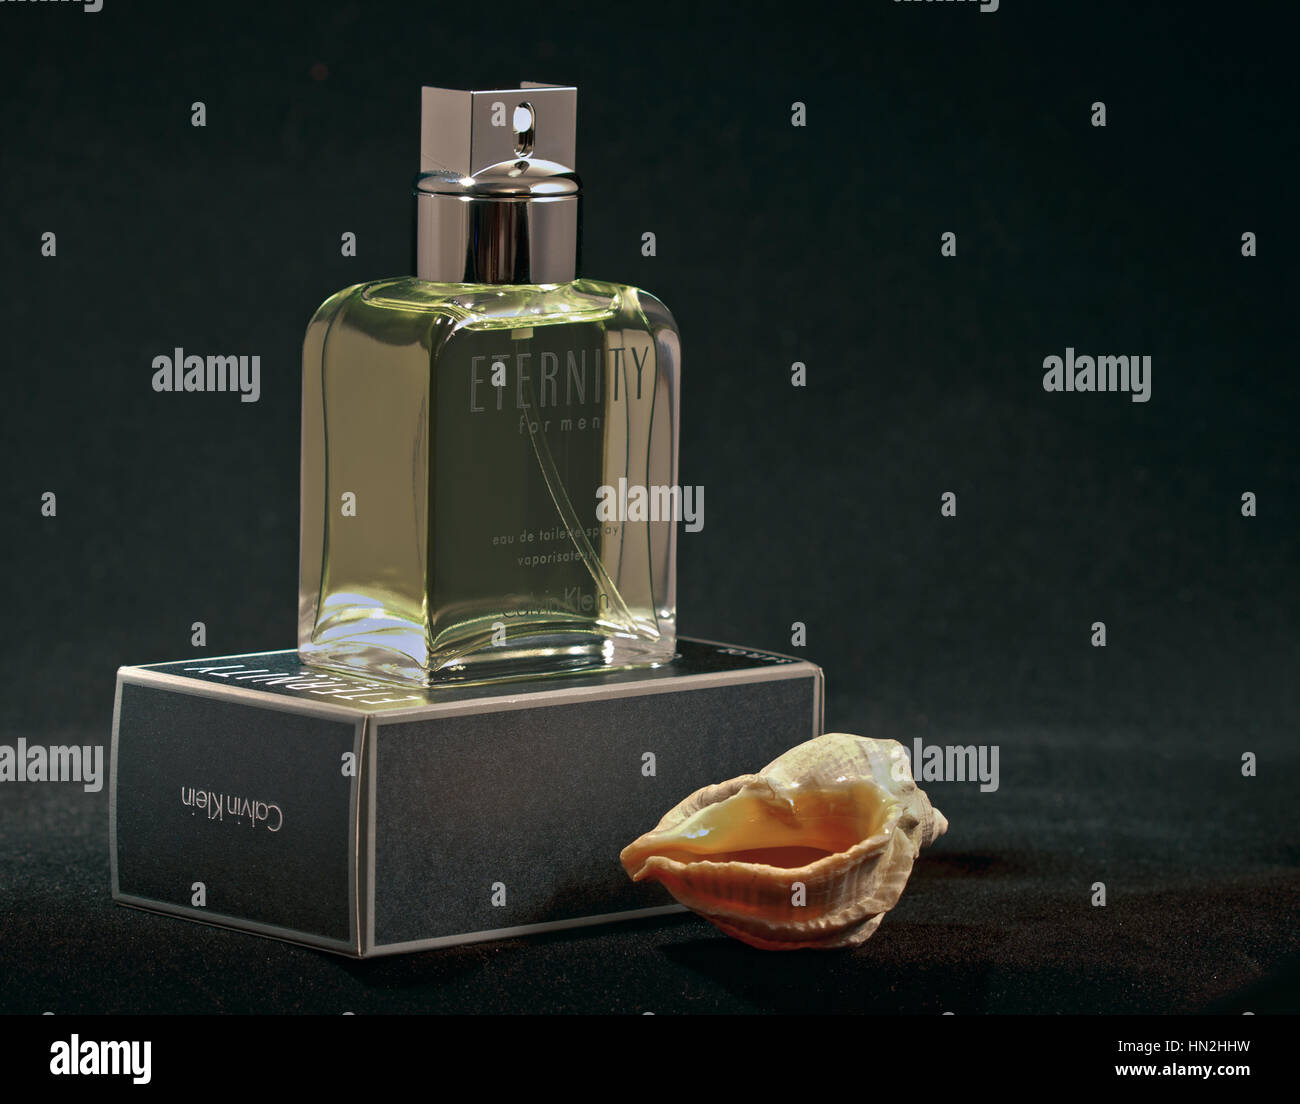 Calvin Klein Eternity fragrance for men bottle and pack against black  background Stock Photo - Alamy